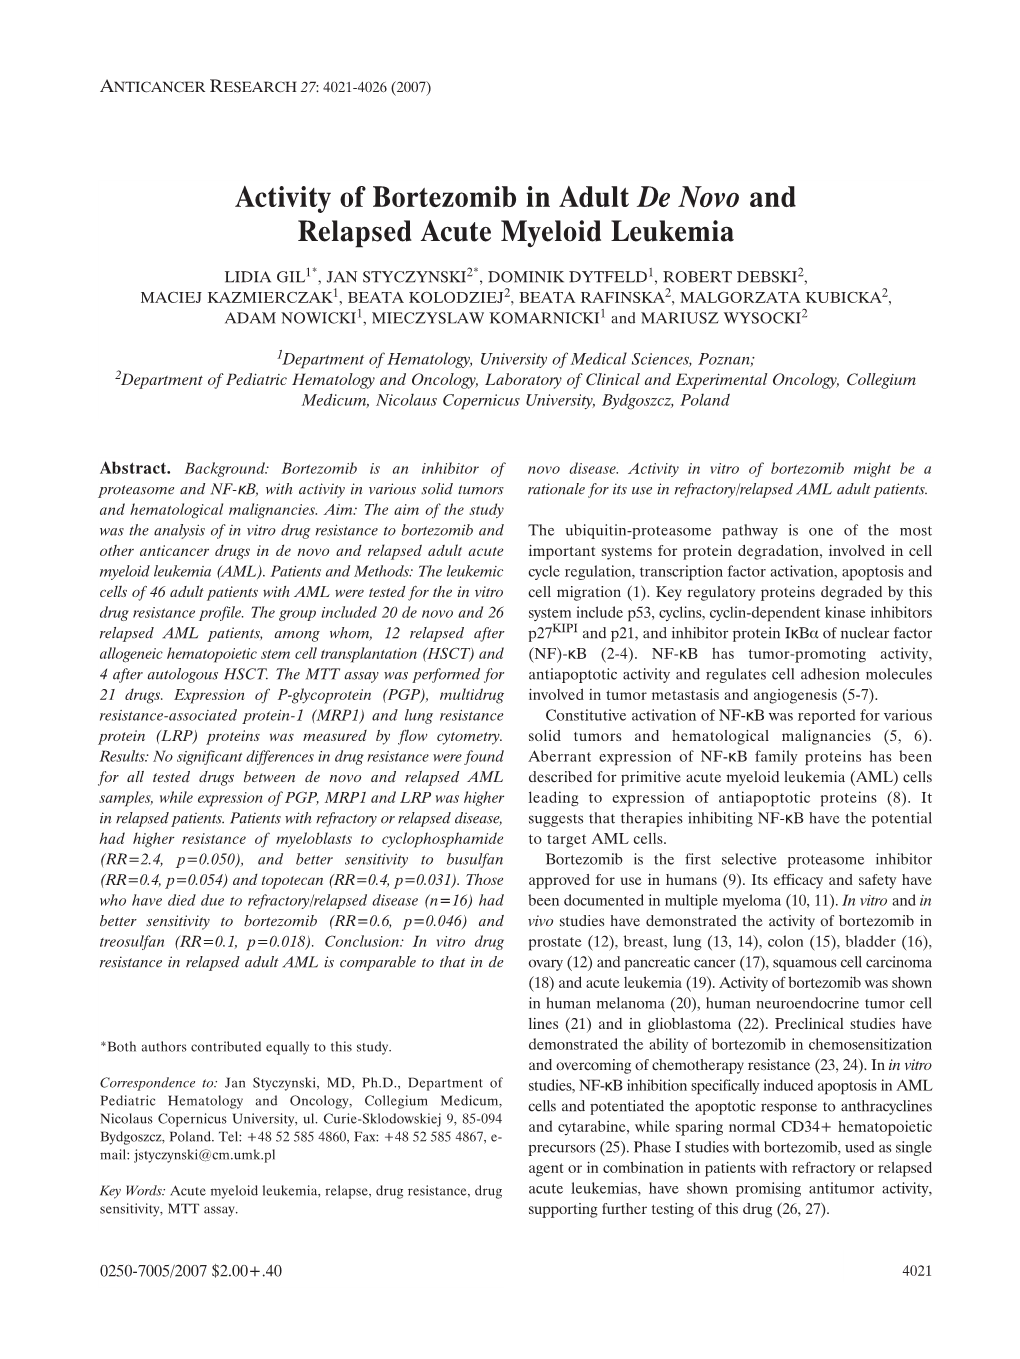 Activity of Bortezomib in Adult De Novo and Relapsed Acute Myeloid Leukemia